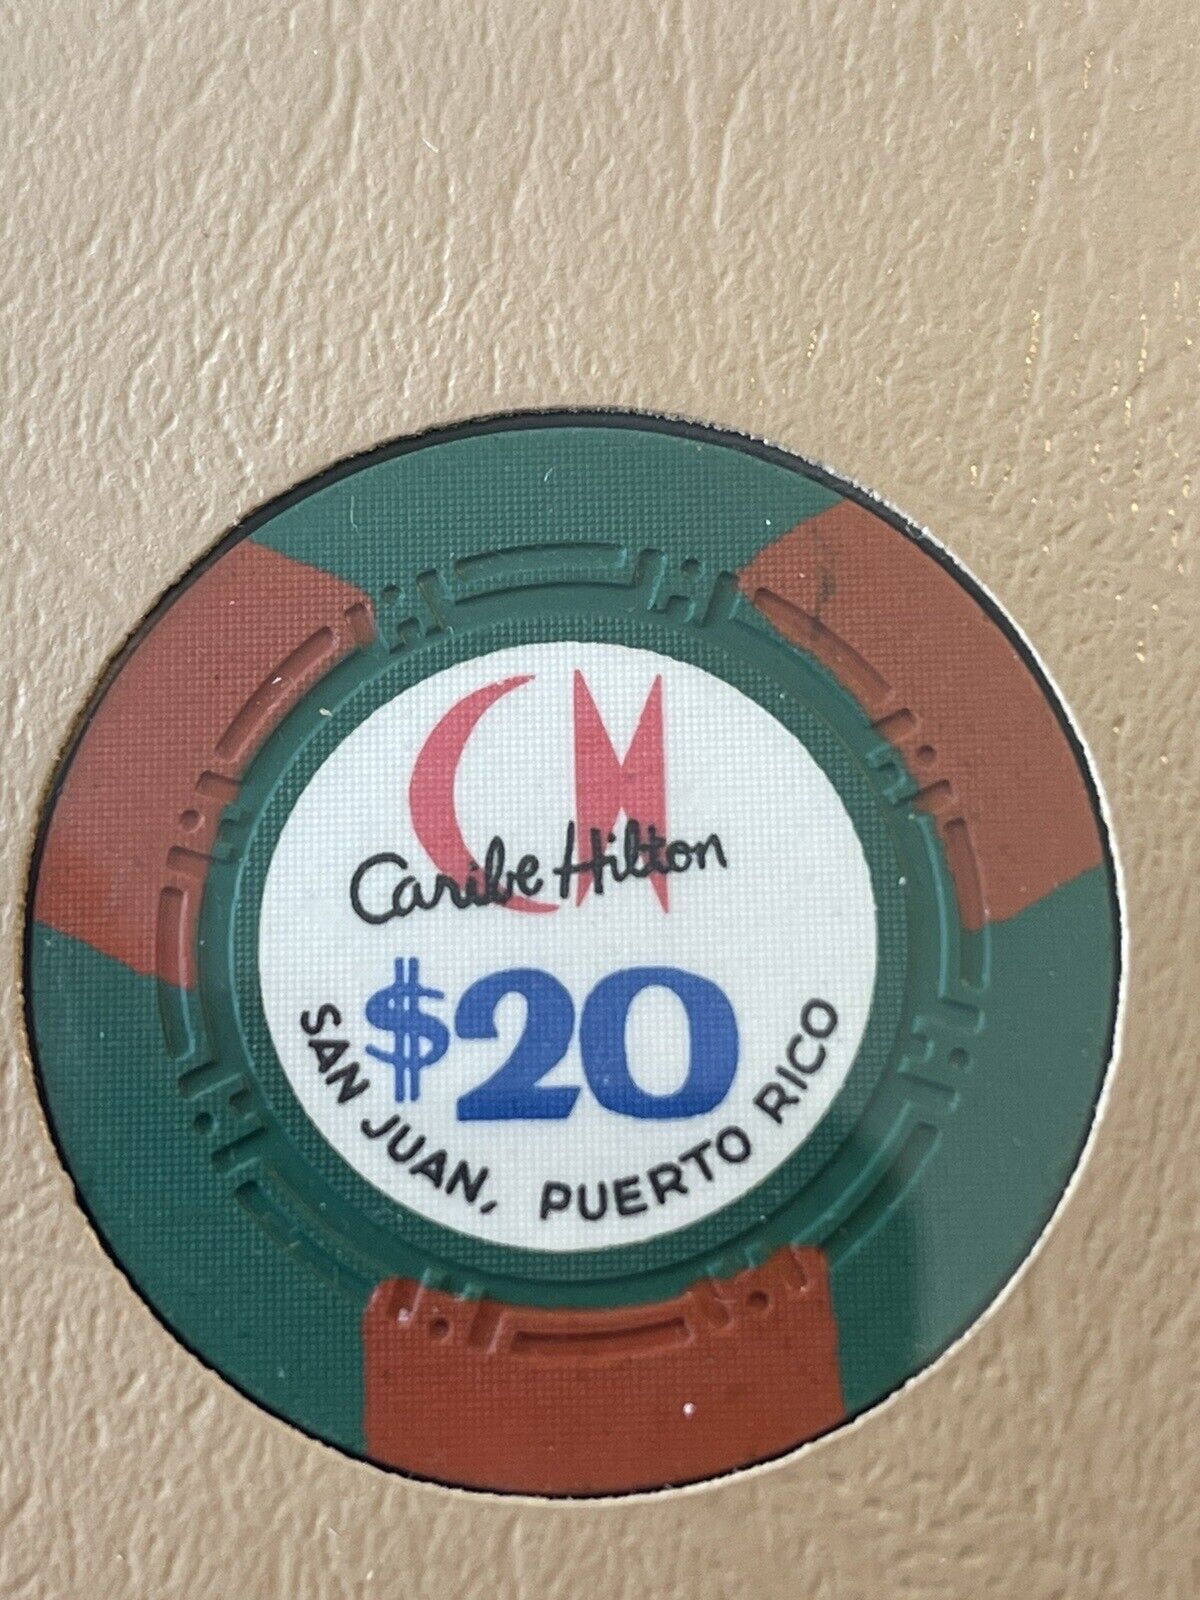 $20 Caribe Hilton San Juan Puerto Rico Casino Chip **Rare** CHC-20a